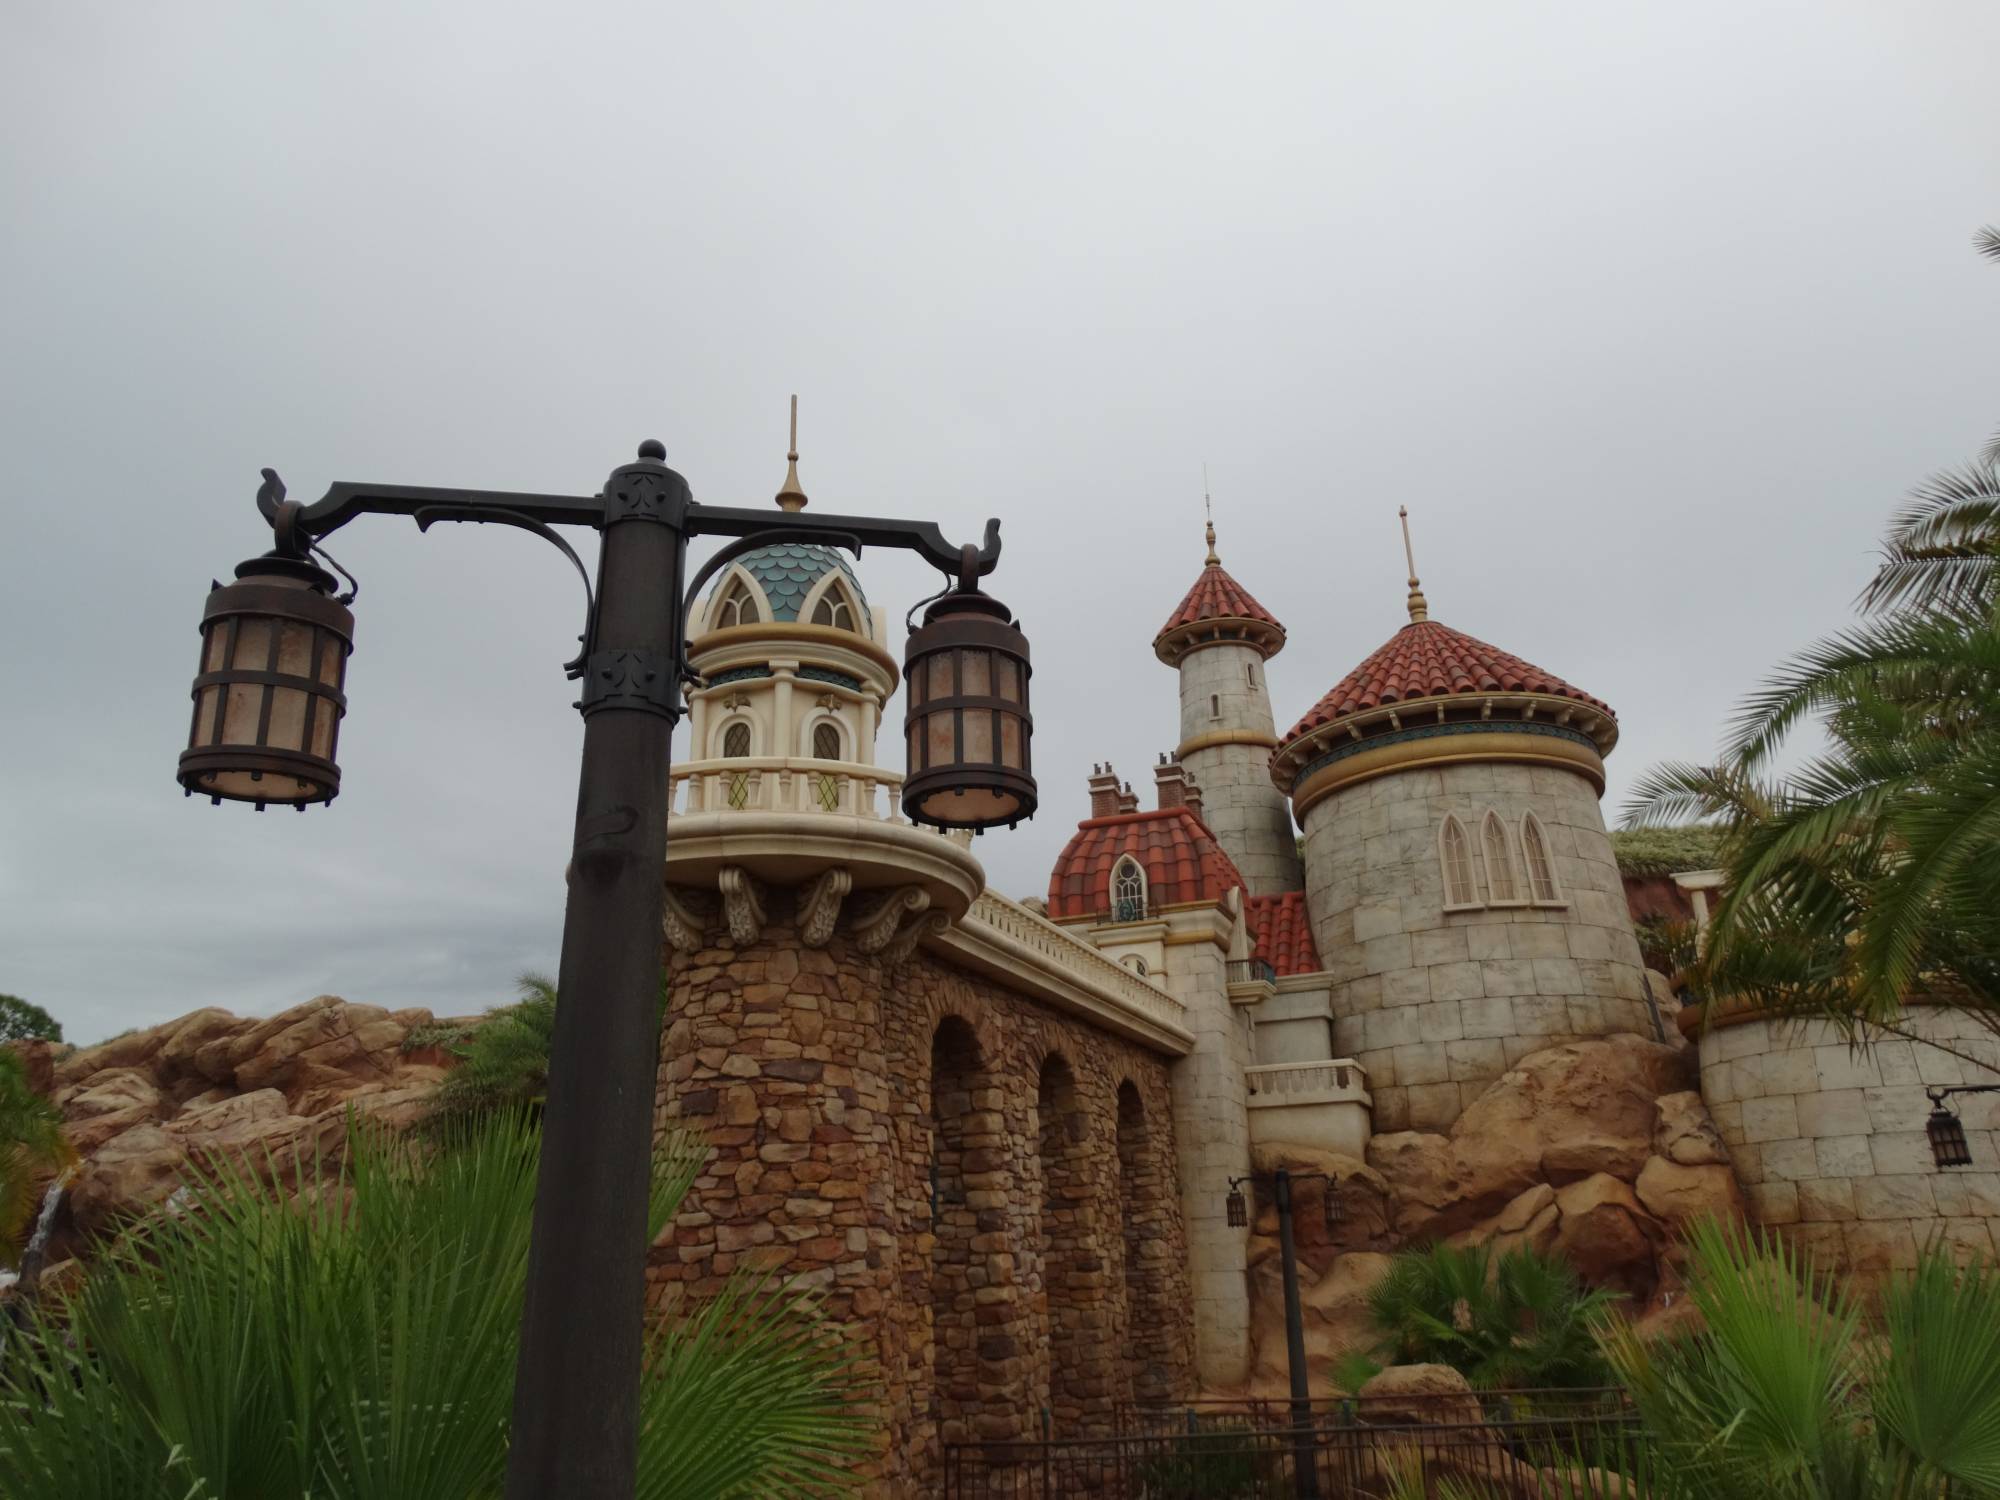 Enjoy the expanded Fantasyland at the Magic Kingdom |PassPorter.com